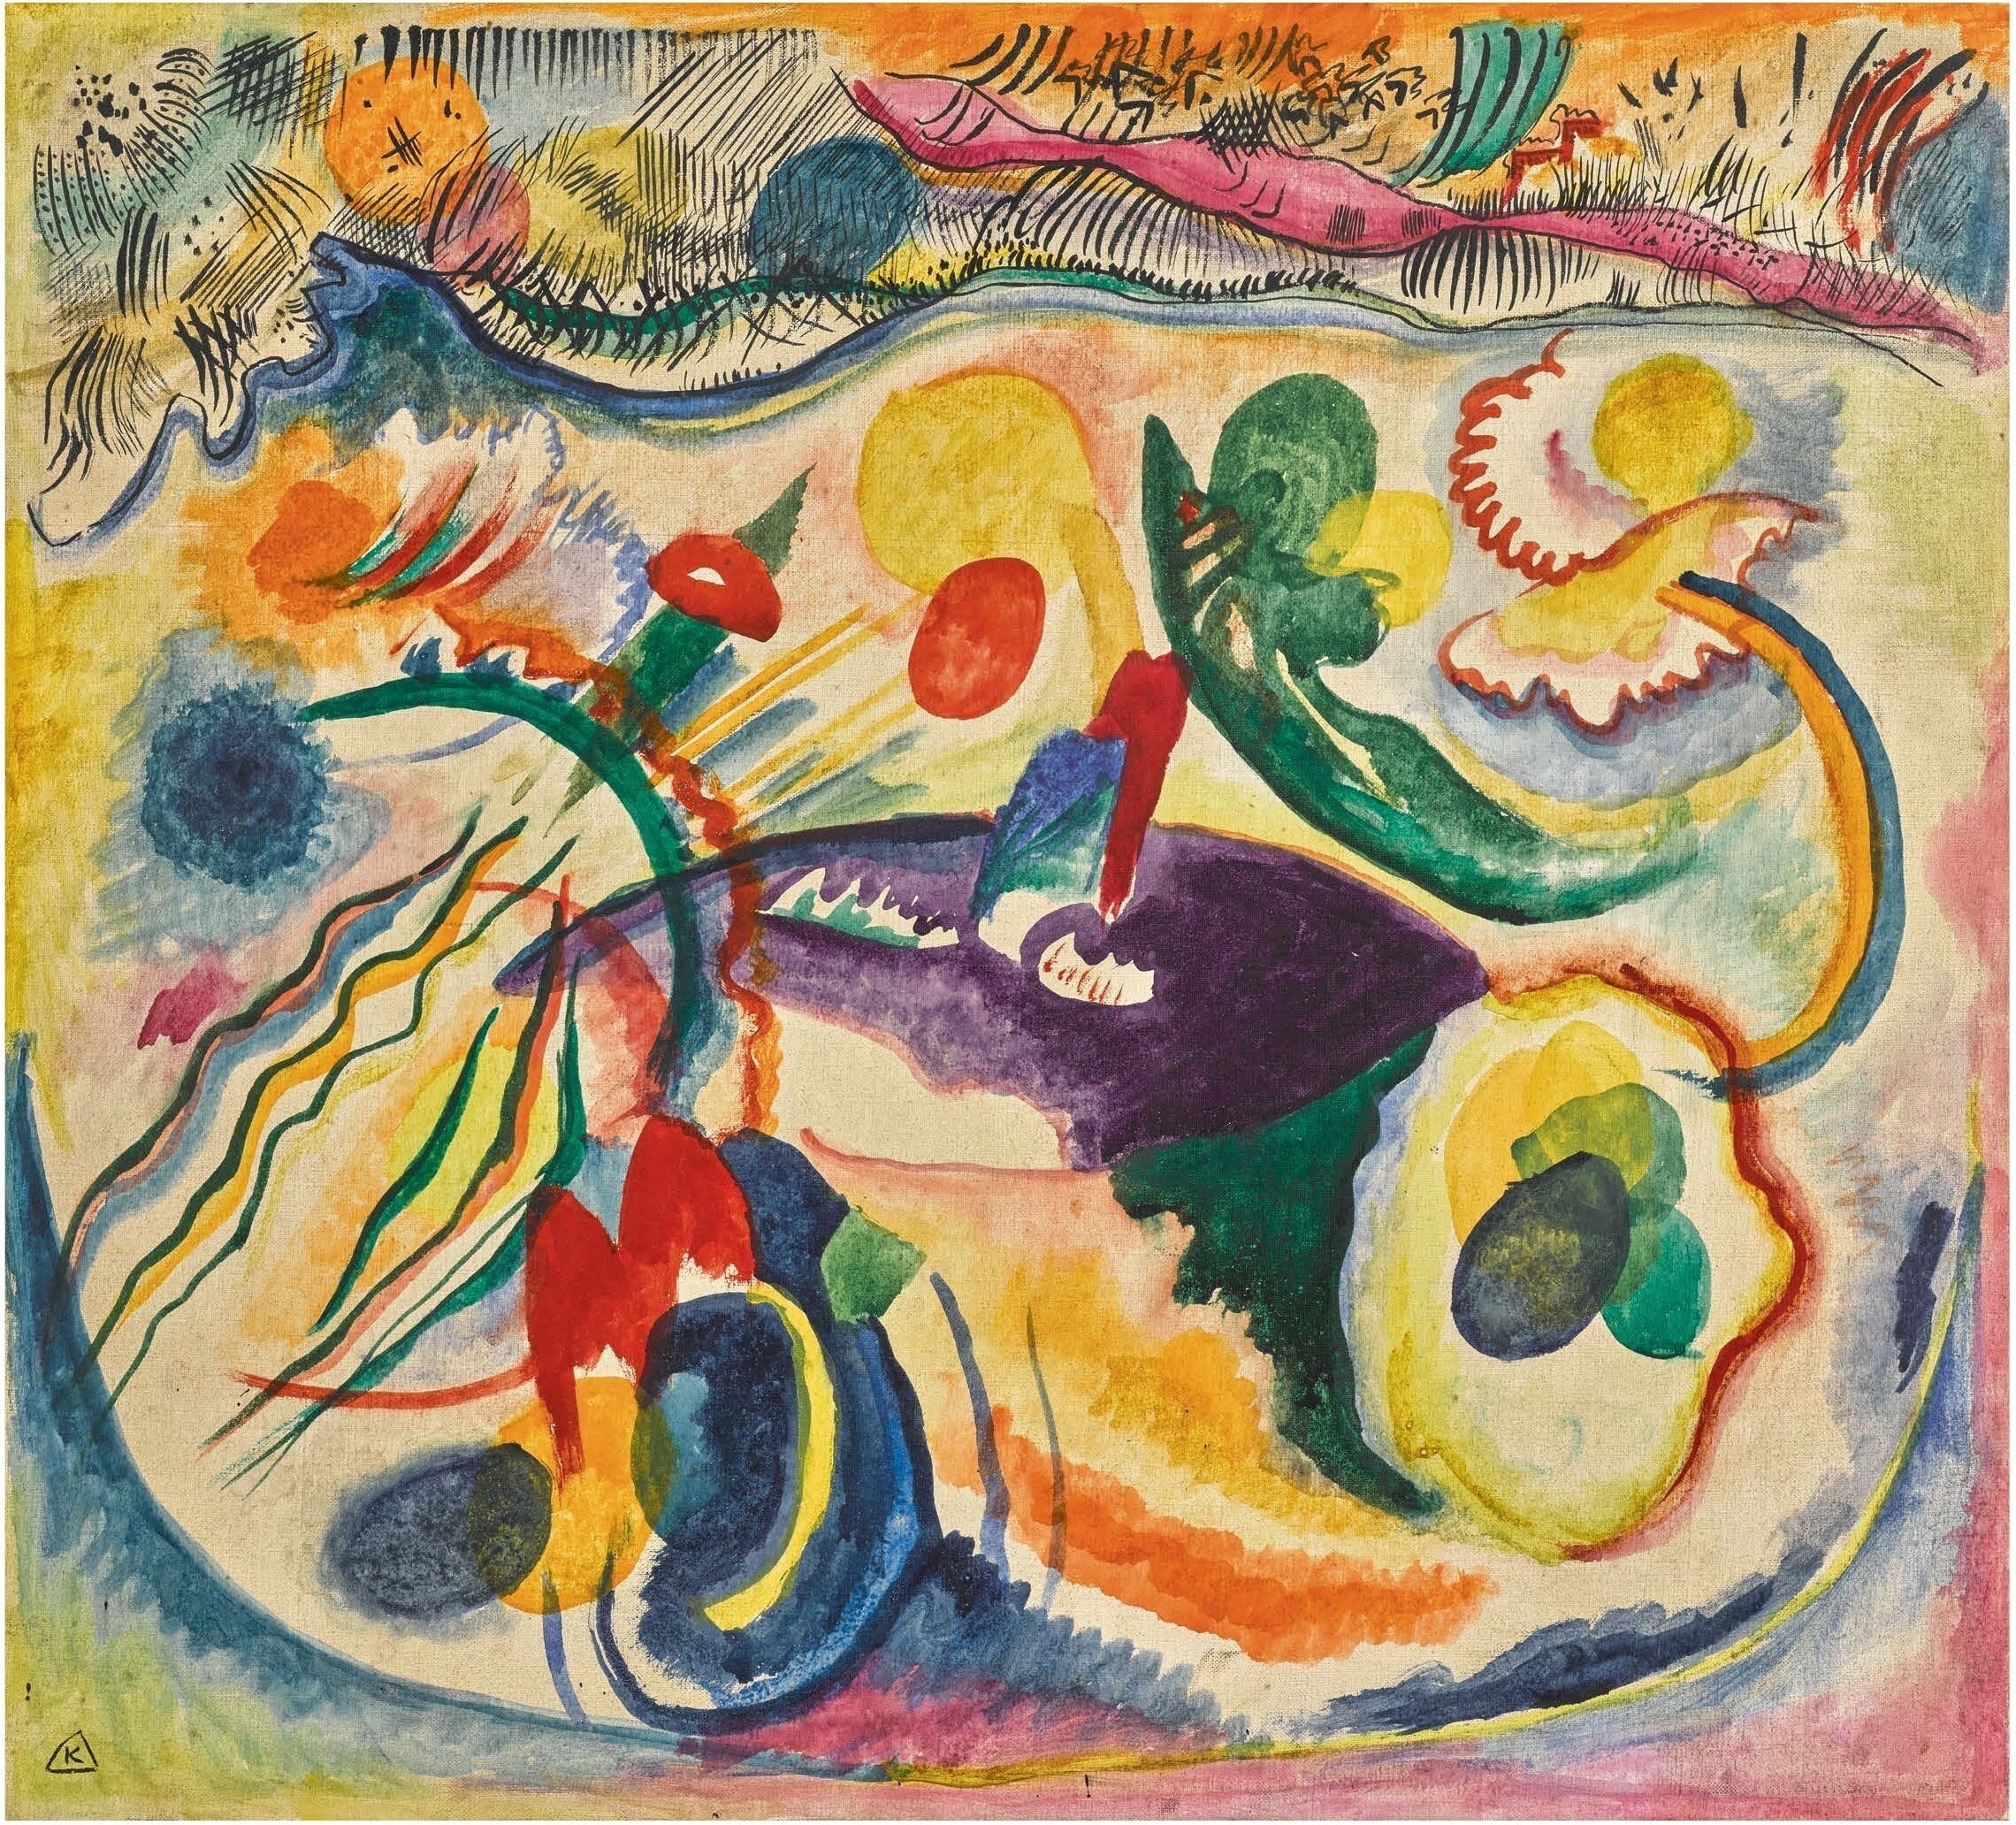 Wassily Kandinsky (1866-1944) Zum thema jüngstes gericht (1913)